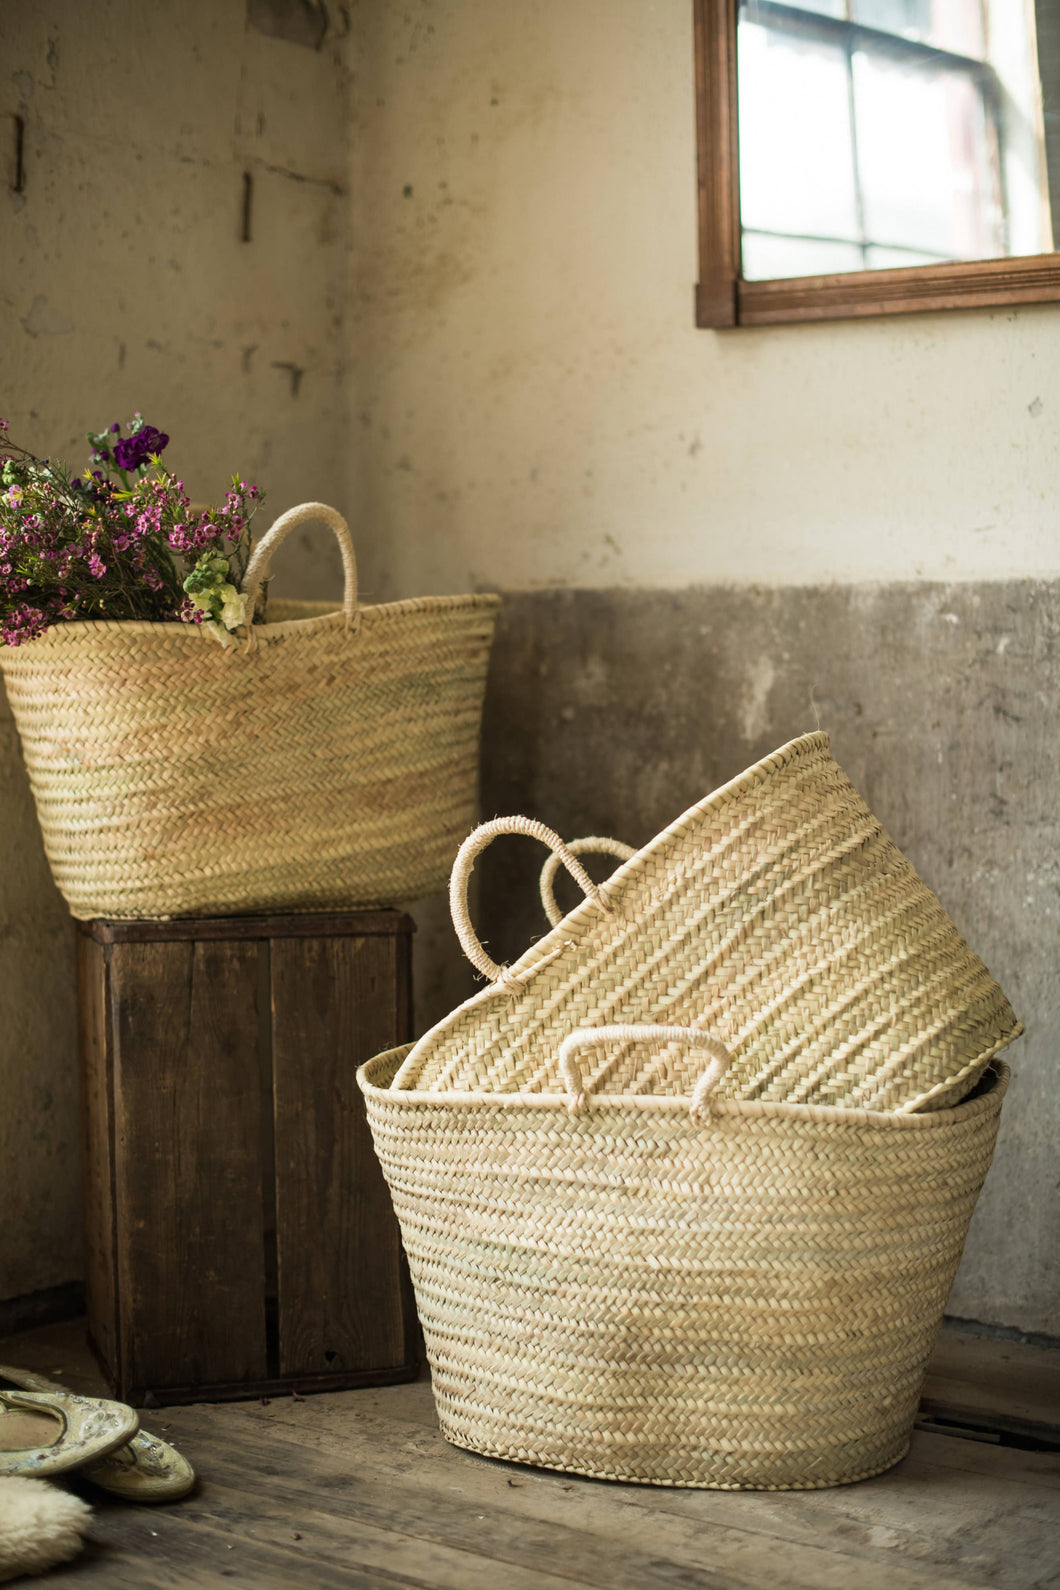 Sisal handled baskets - Large